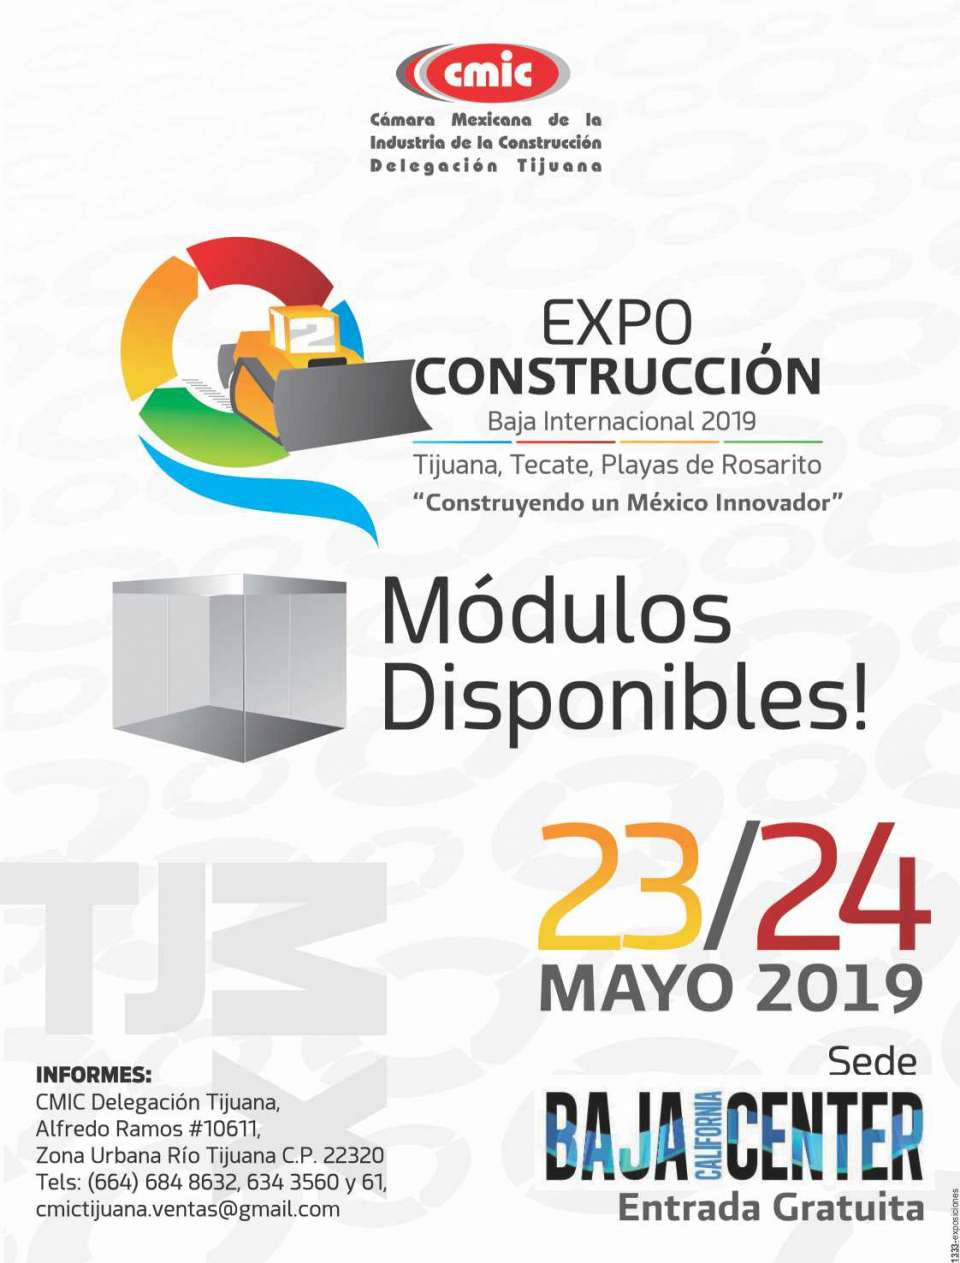 Expo Construccion Baja Internacional, from May 23 to 24, 2019 in Baja California Center